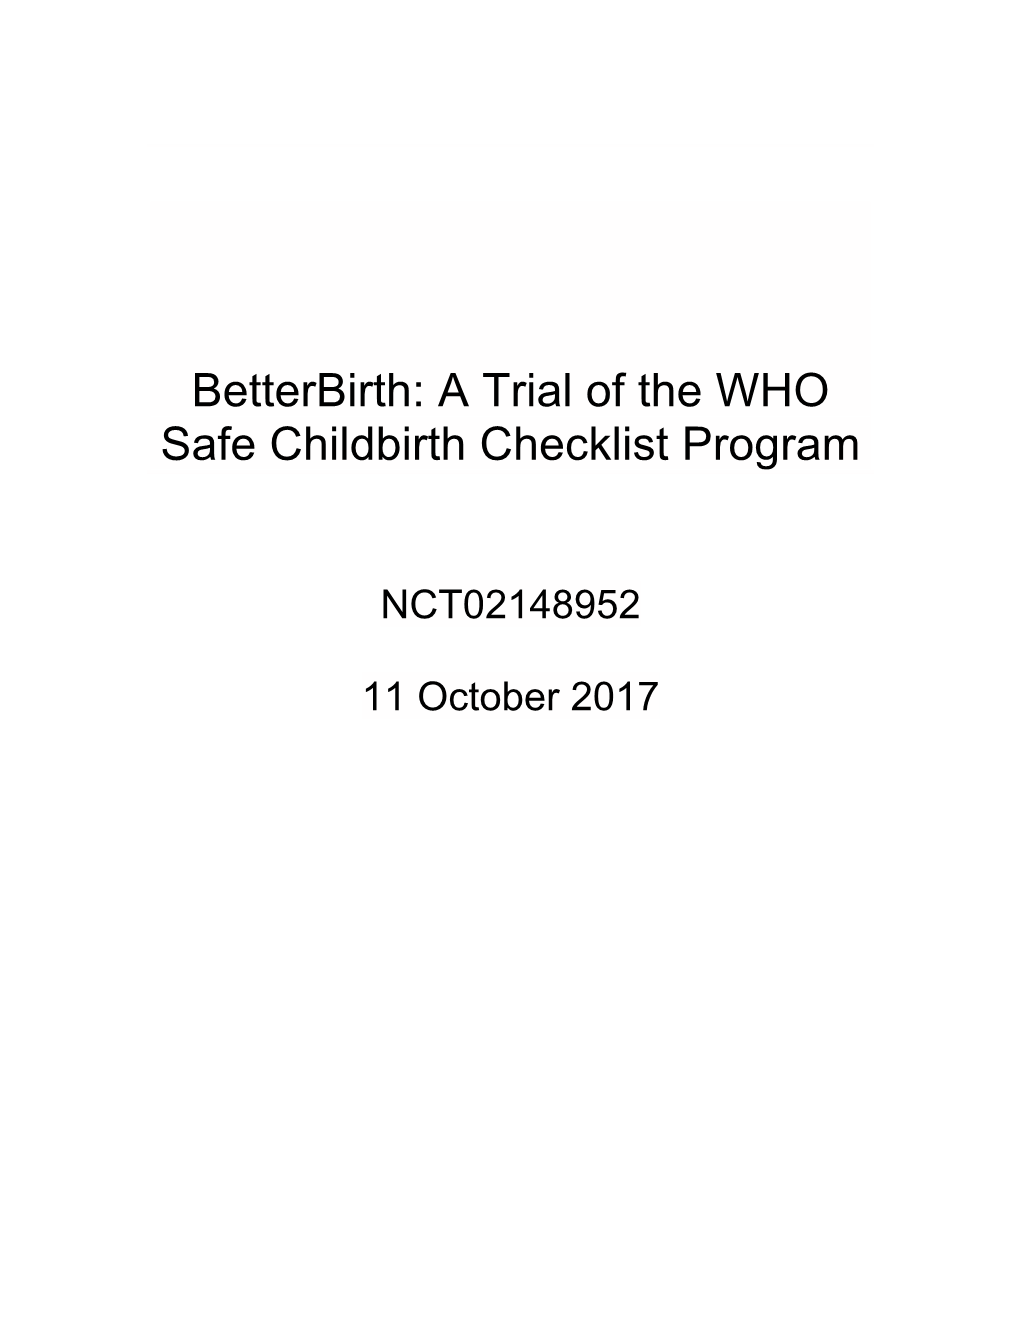 Betterbirth: a Trial of the WHO Safe Childbirth Checklist Program